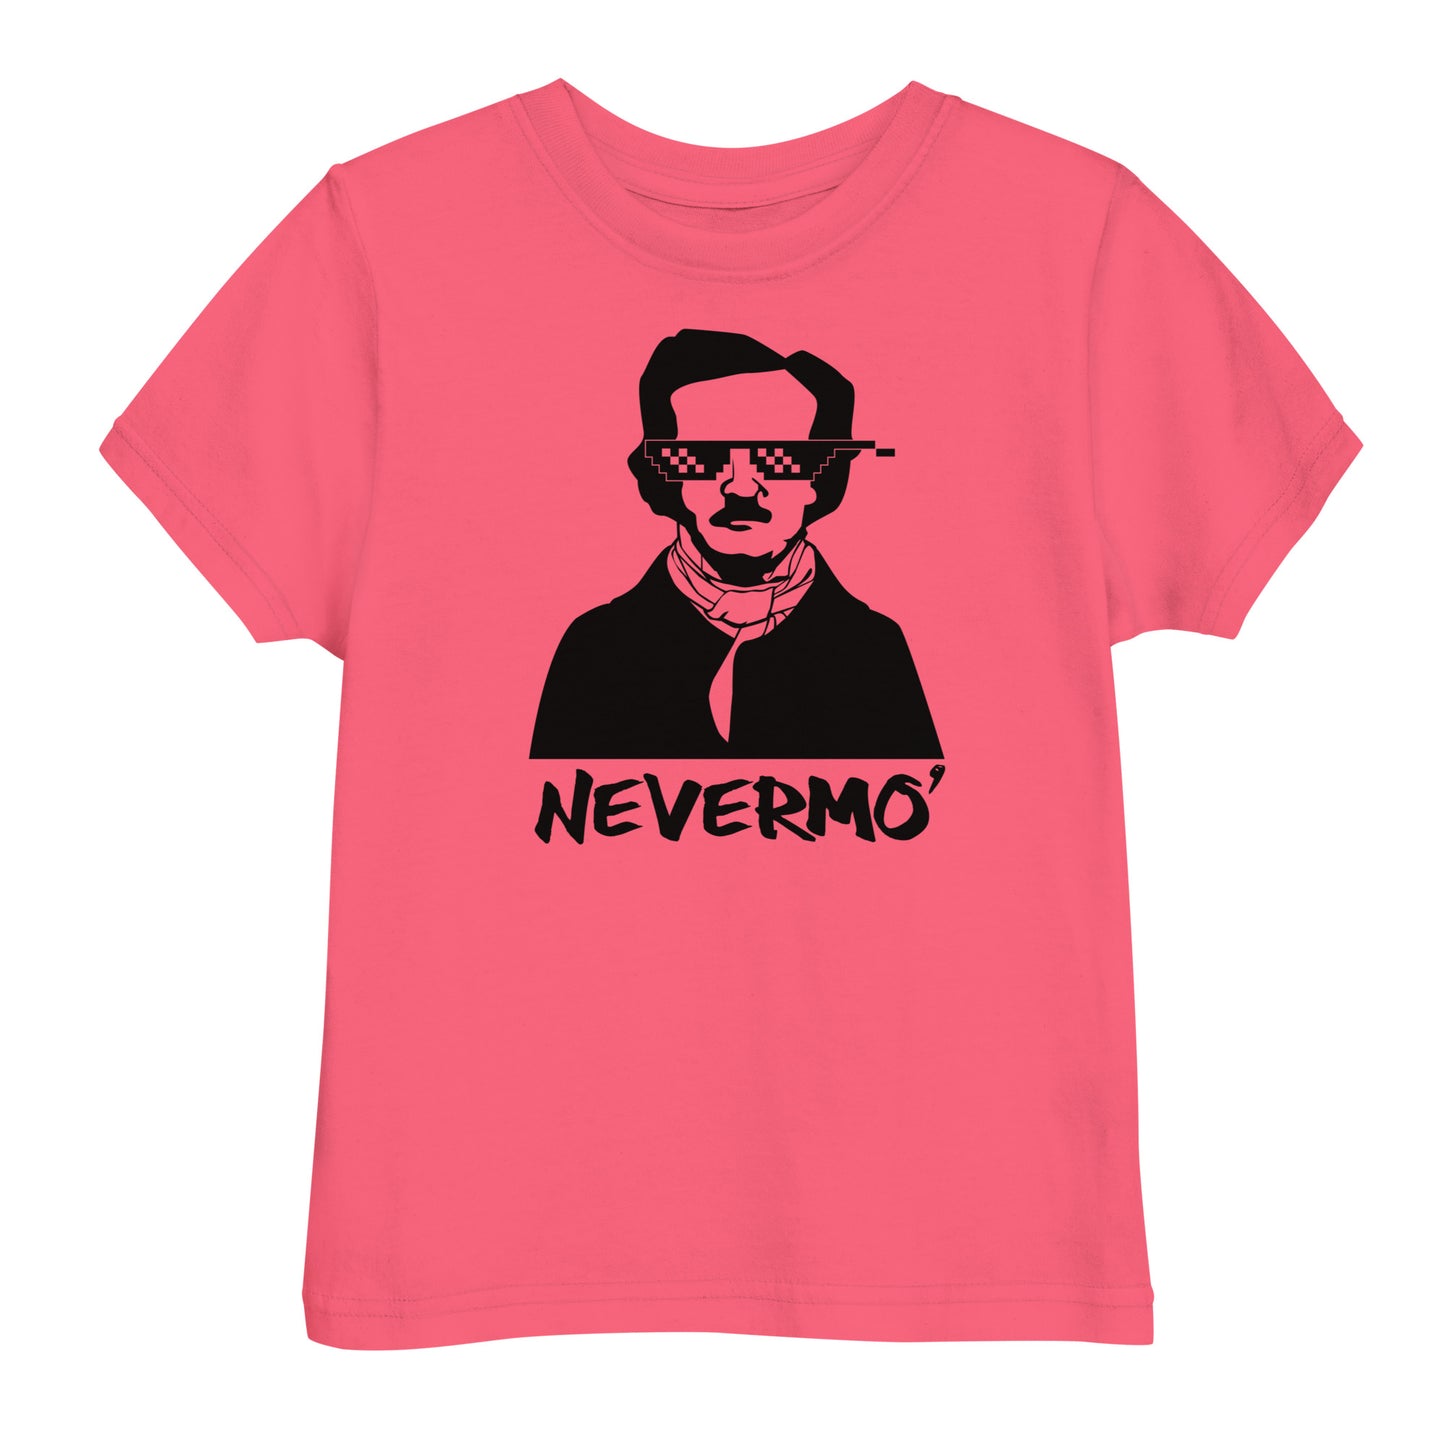 Toddler Edgar Allan Poe "Nevermo" jersey t-shirt - Hot Pink Front